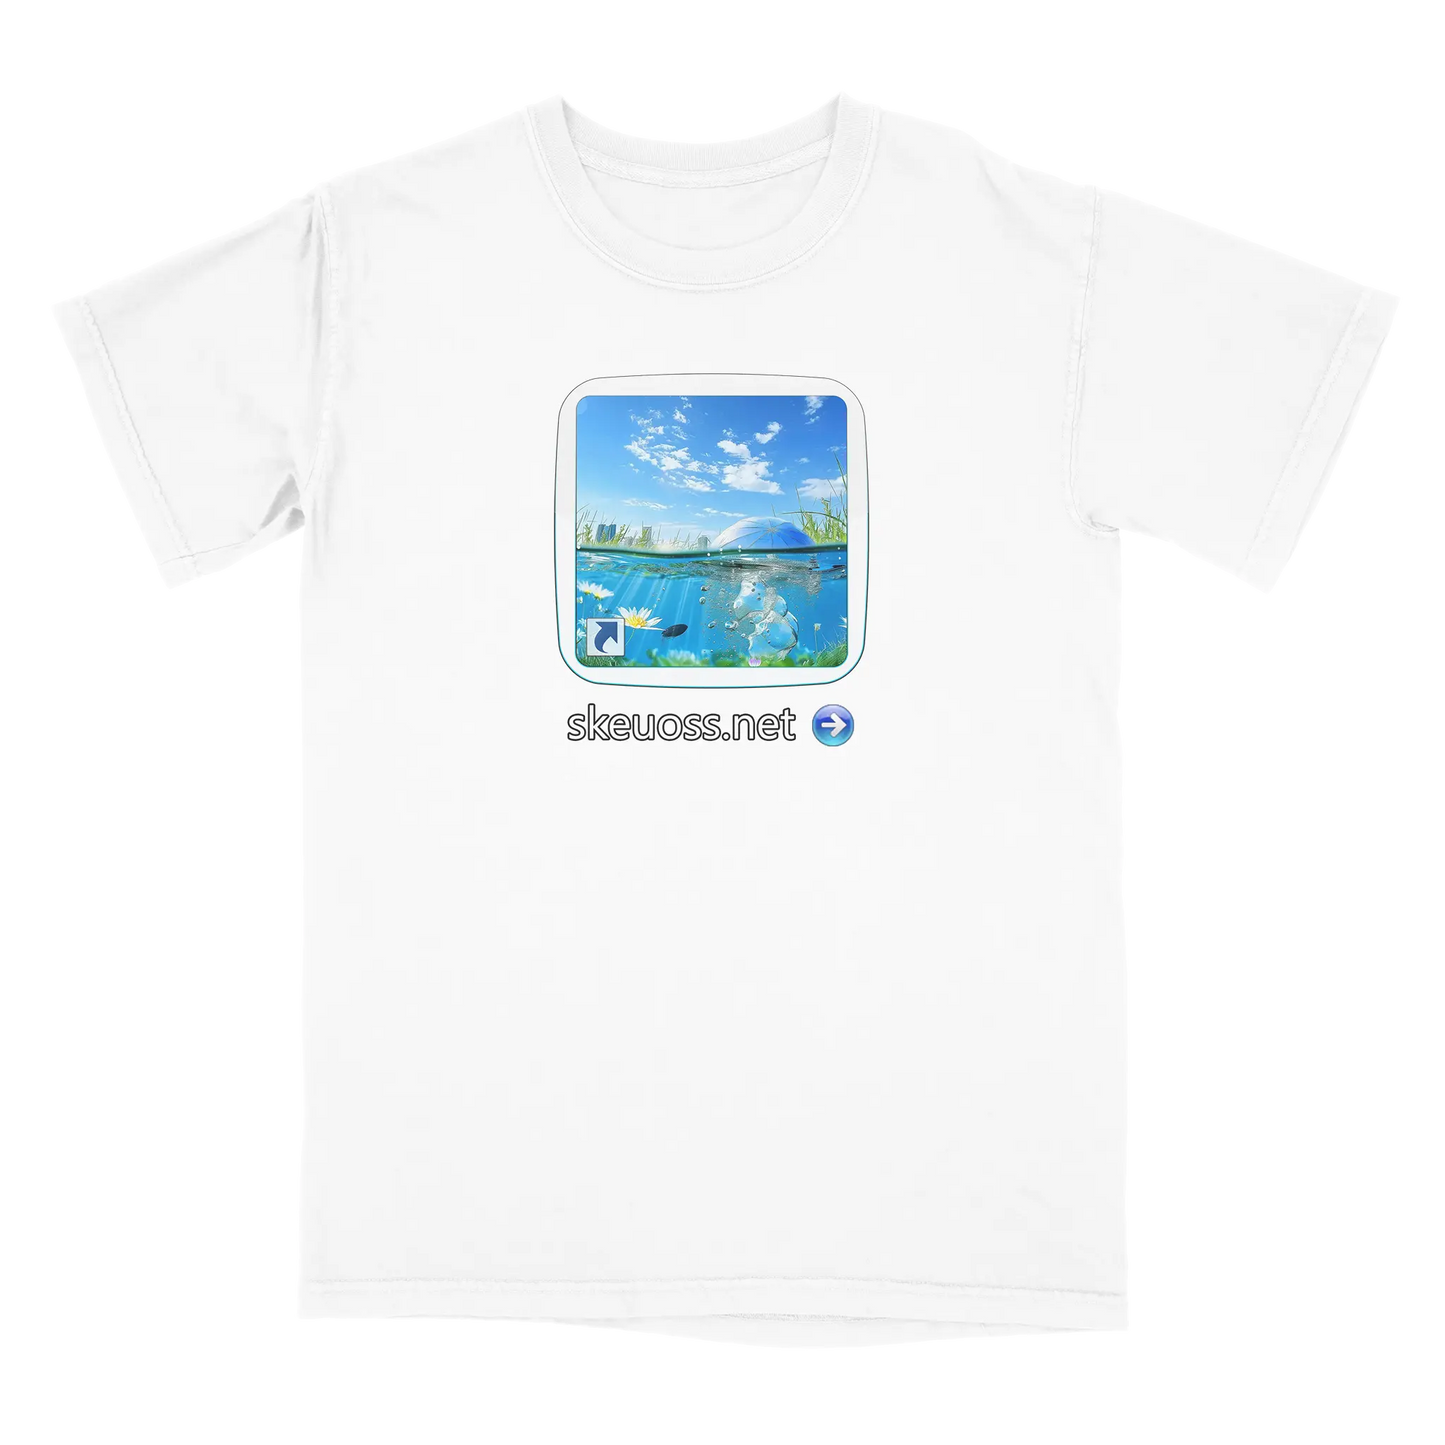 Frutiger Aero T-shirt - User Login Collection - User 231